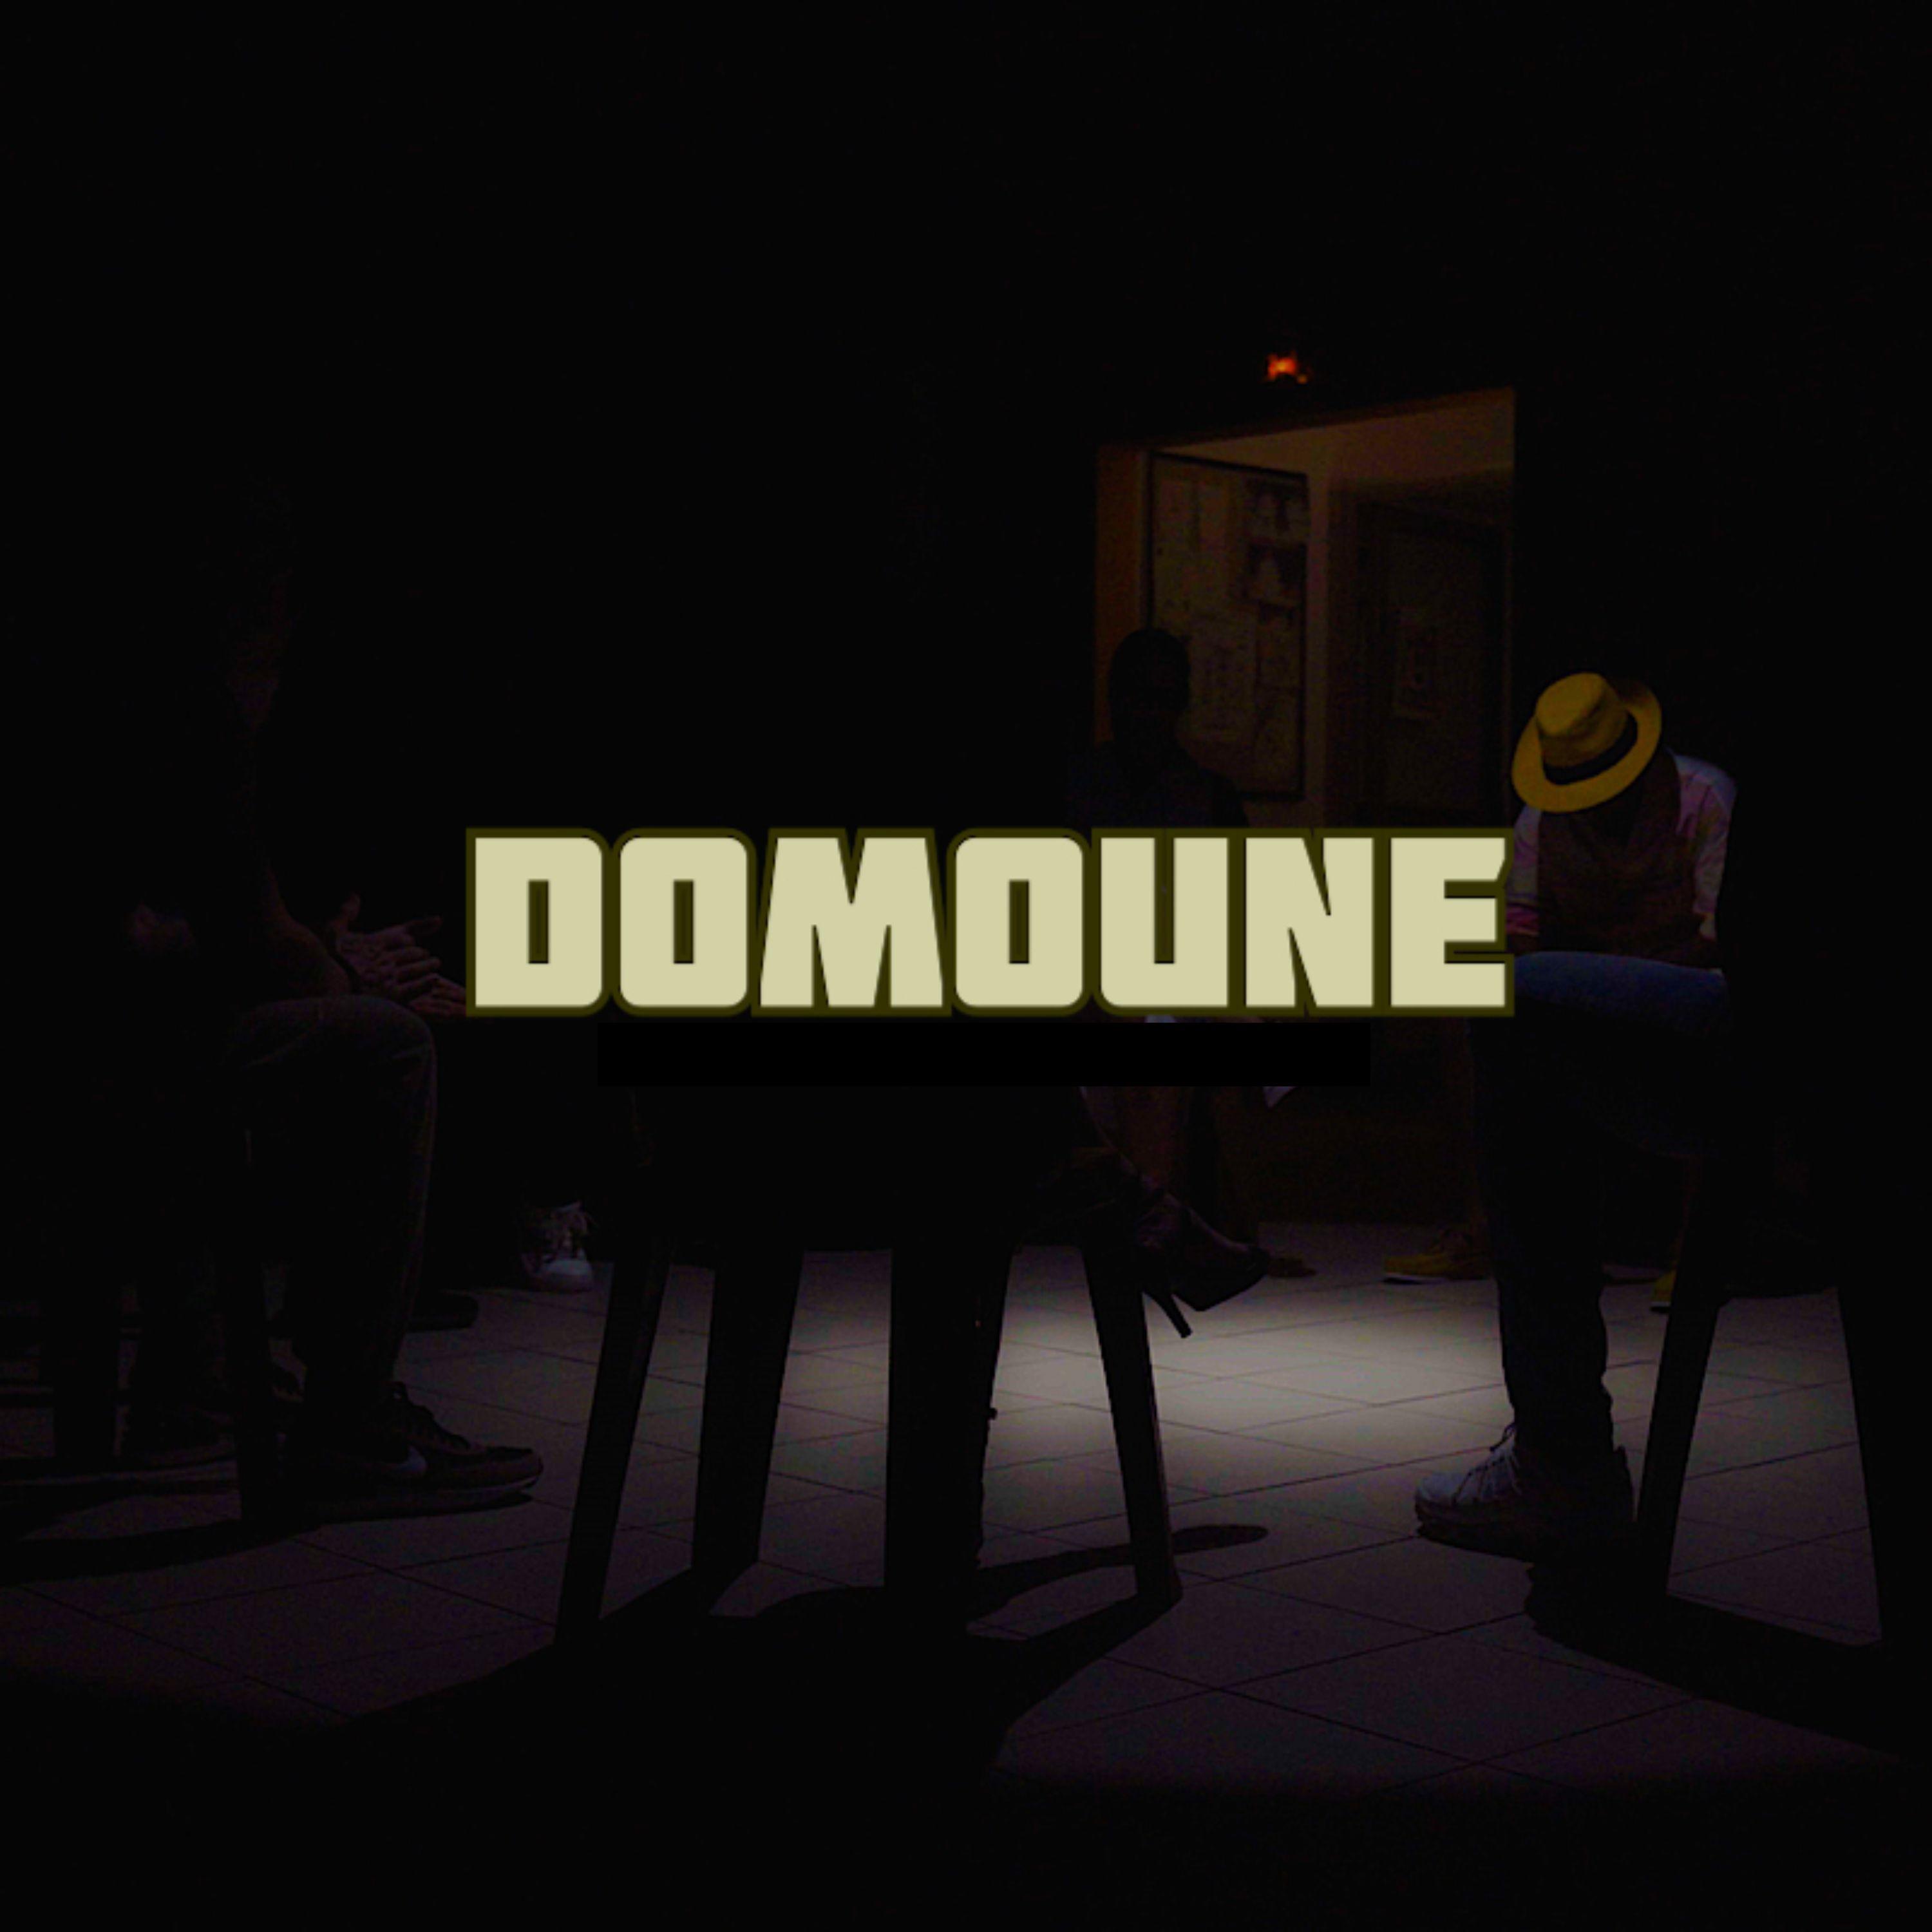 GENERAL - Domoune